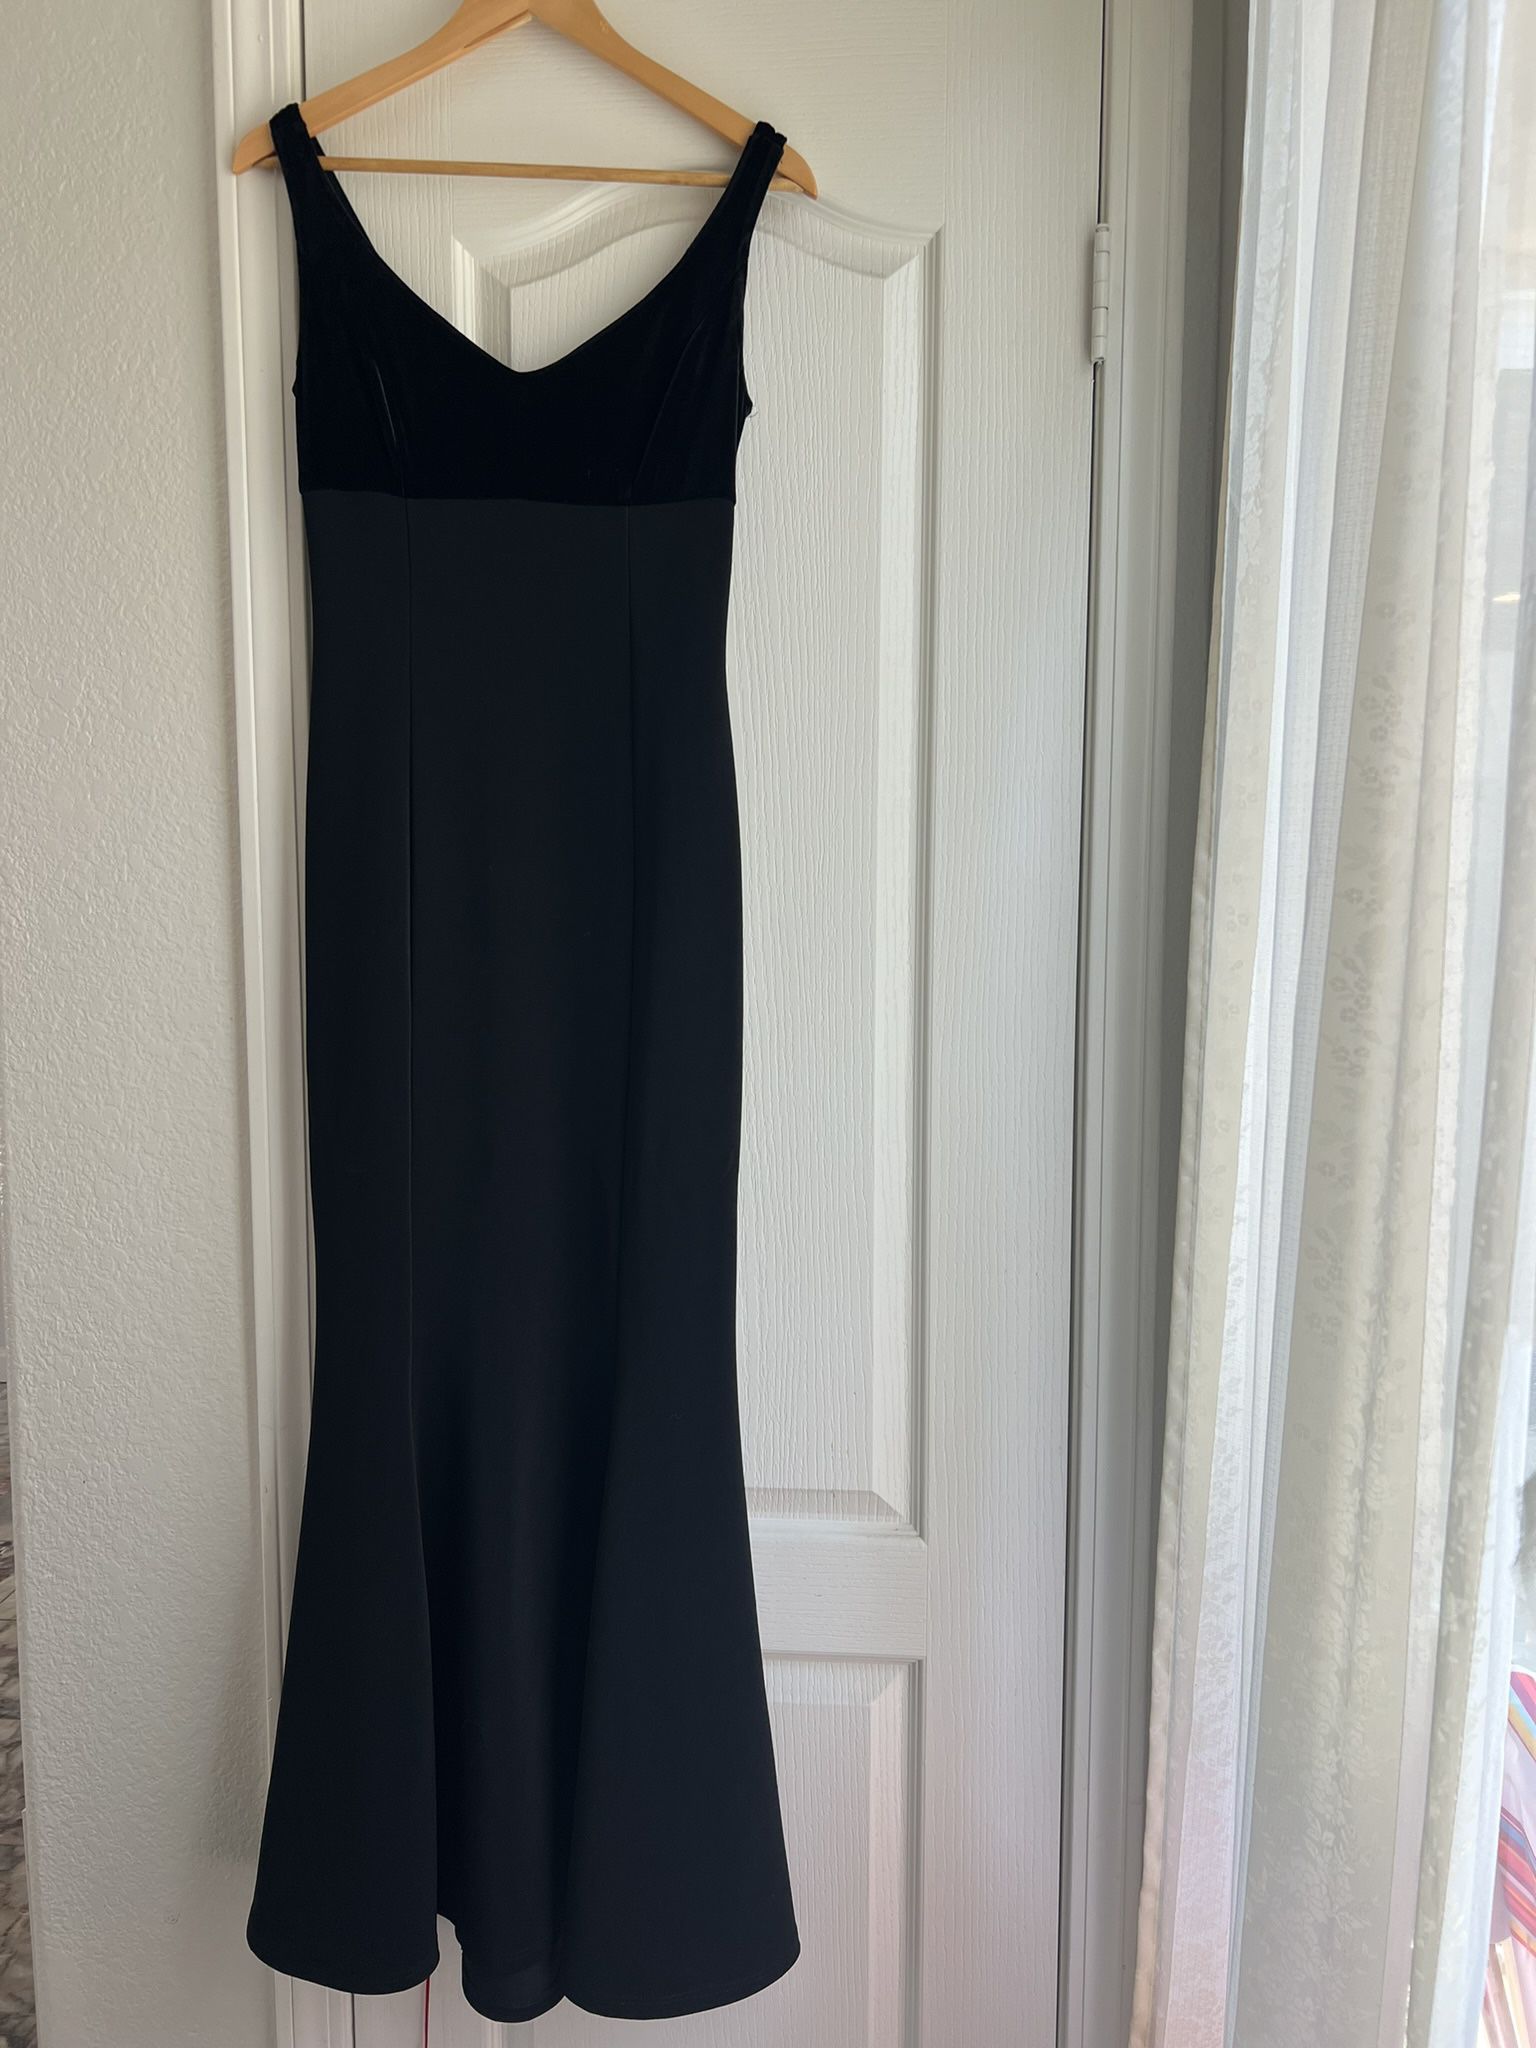 Vintage 100% Silk Prom dress